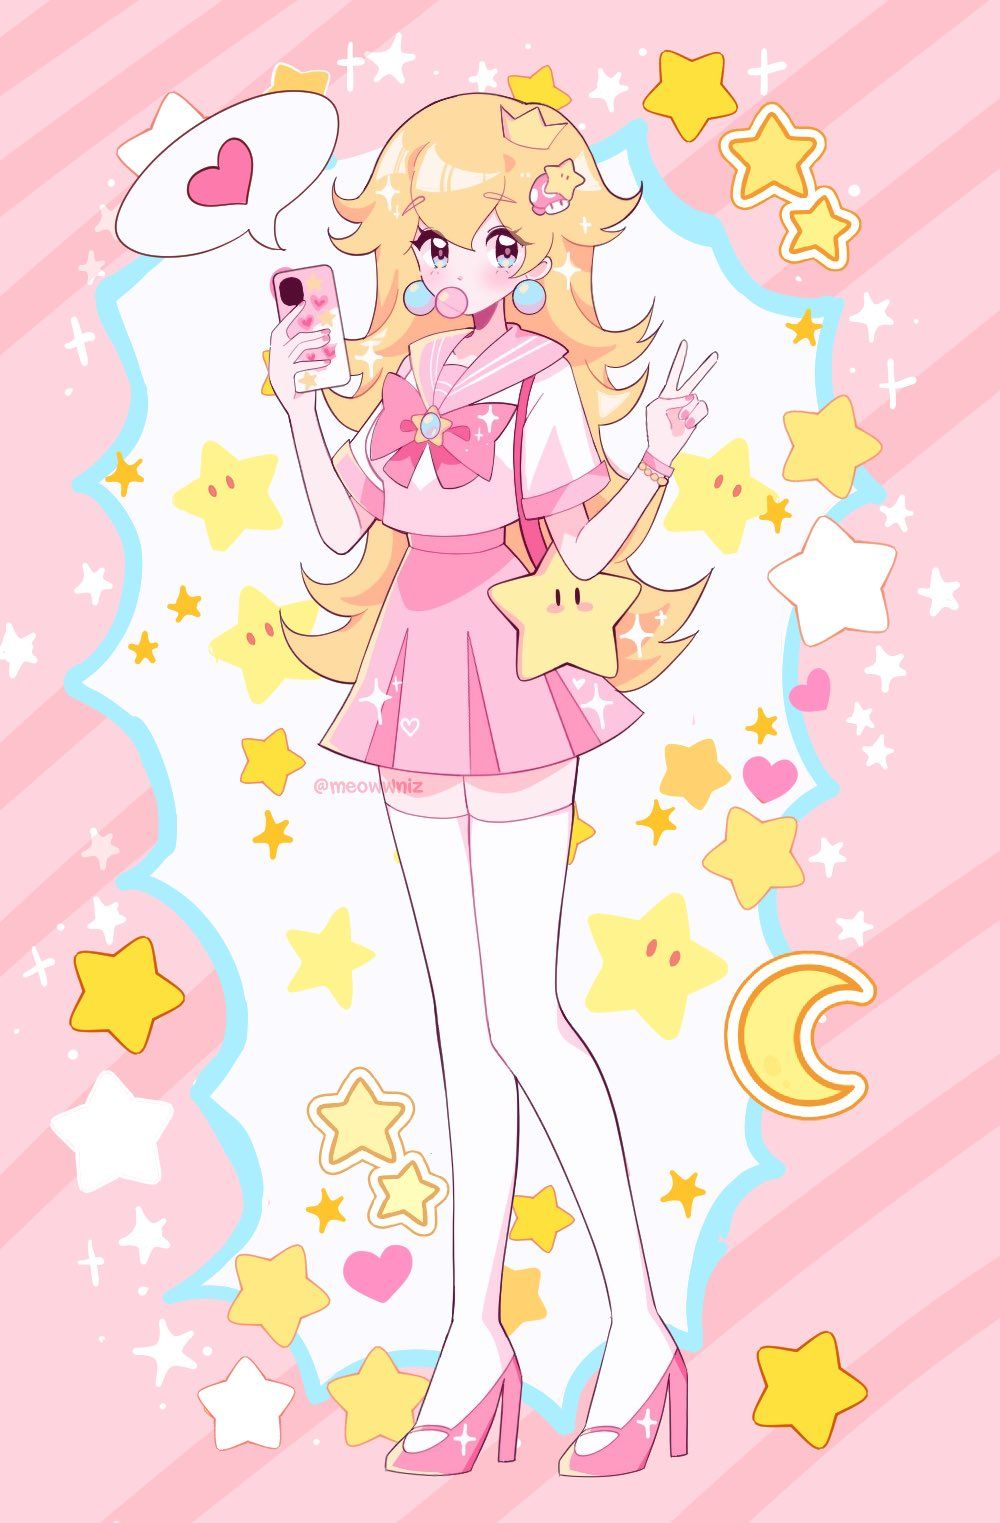 A cartoon girl in pink dress with stars - Princess Peach